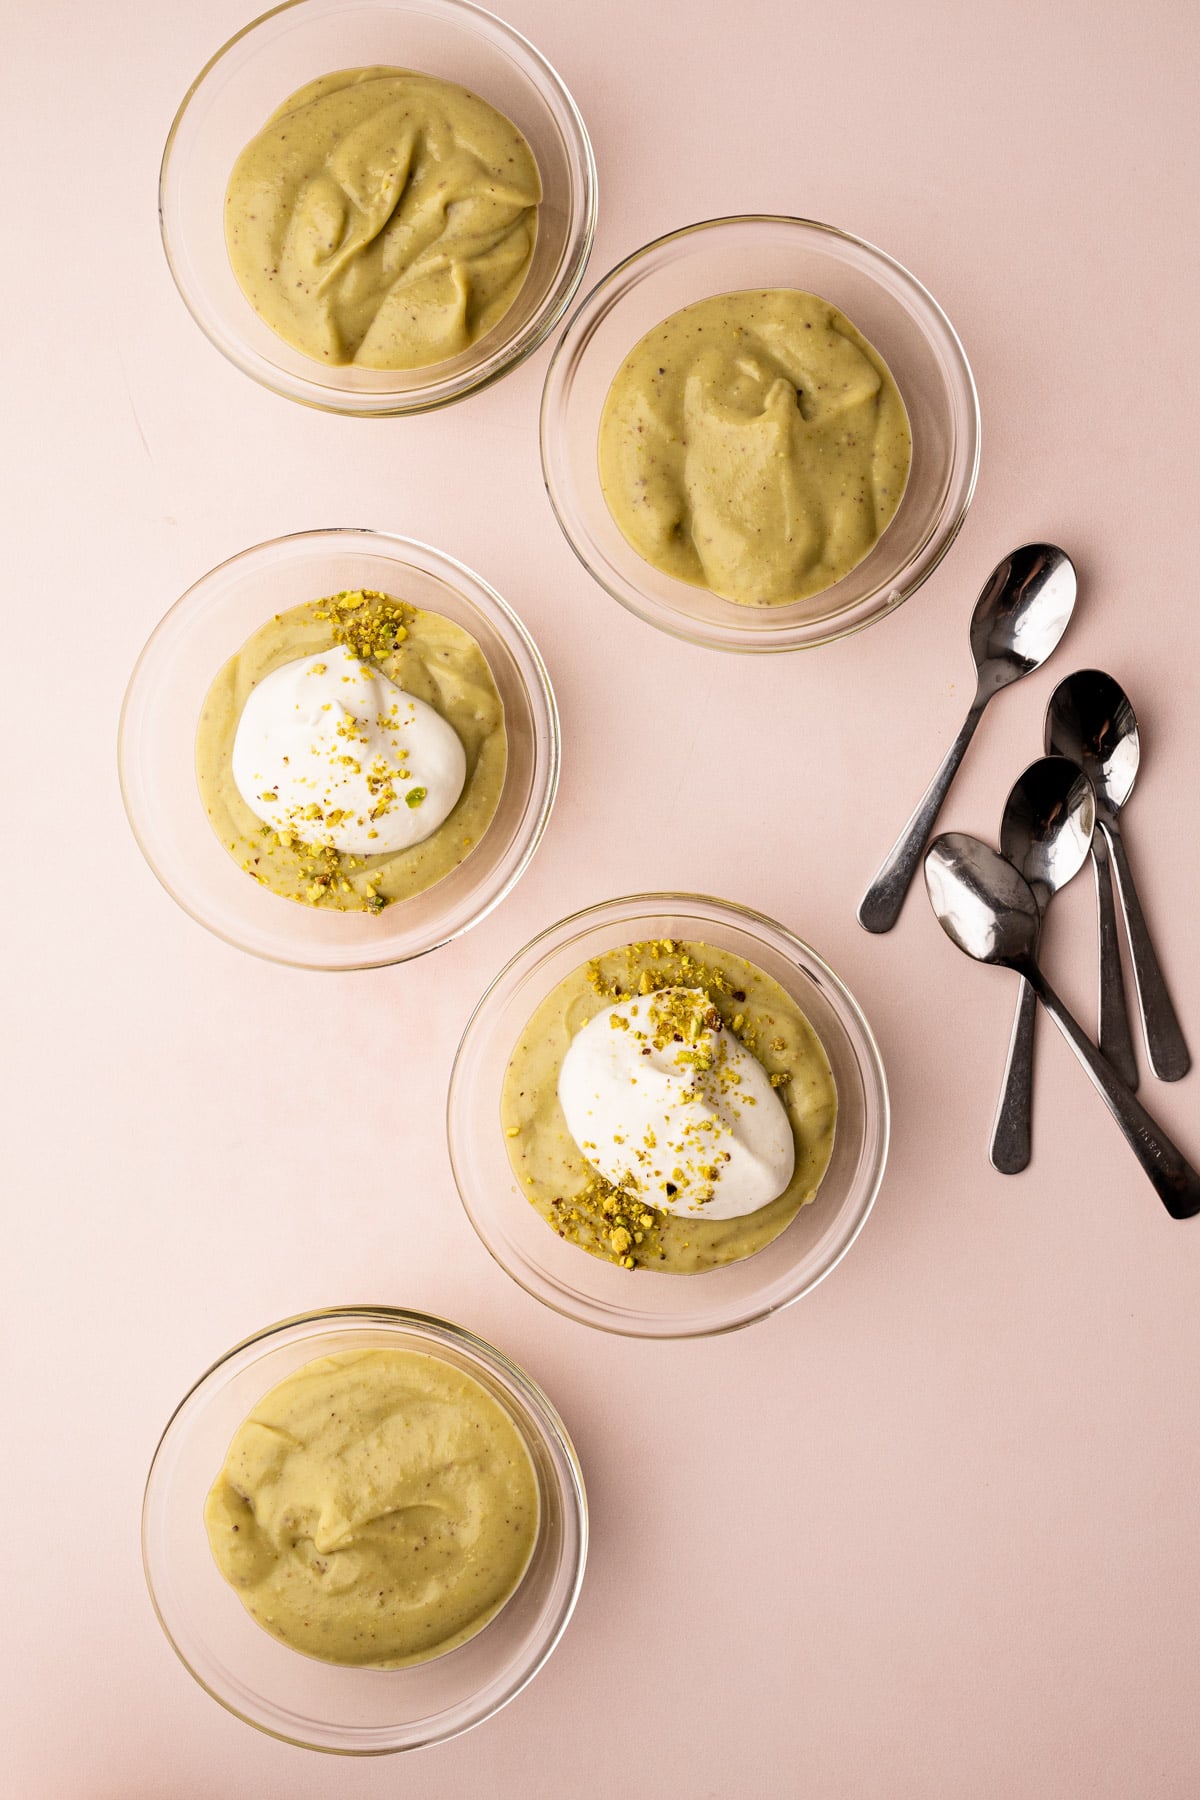 Little bowls with pistachio pudding.